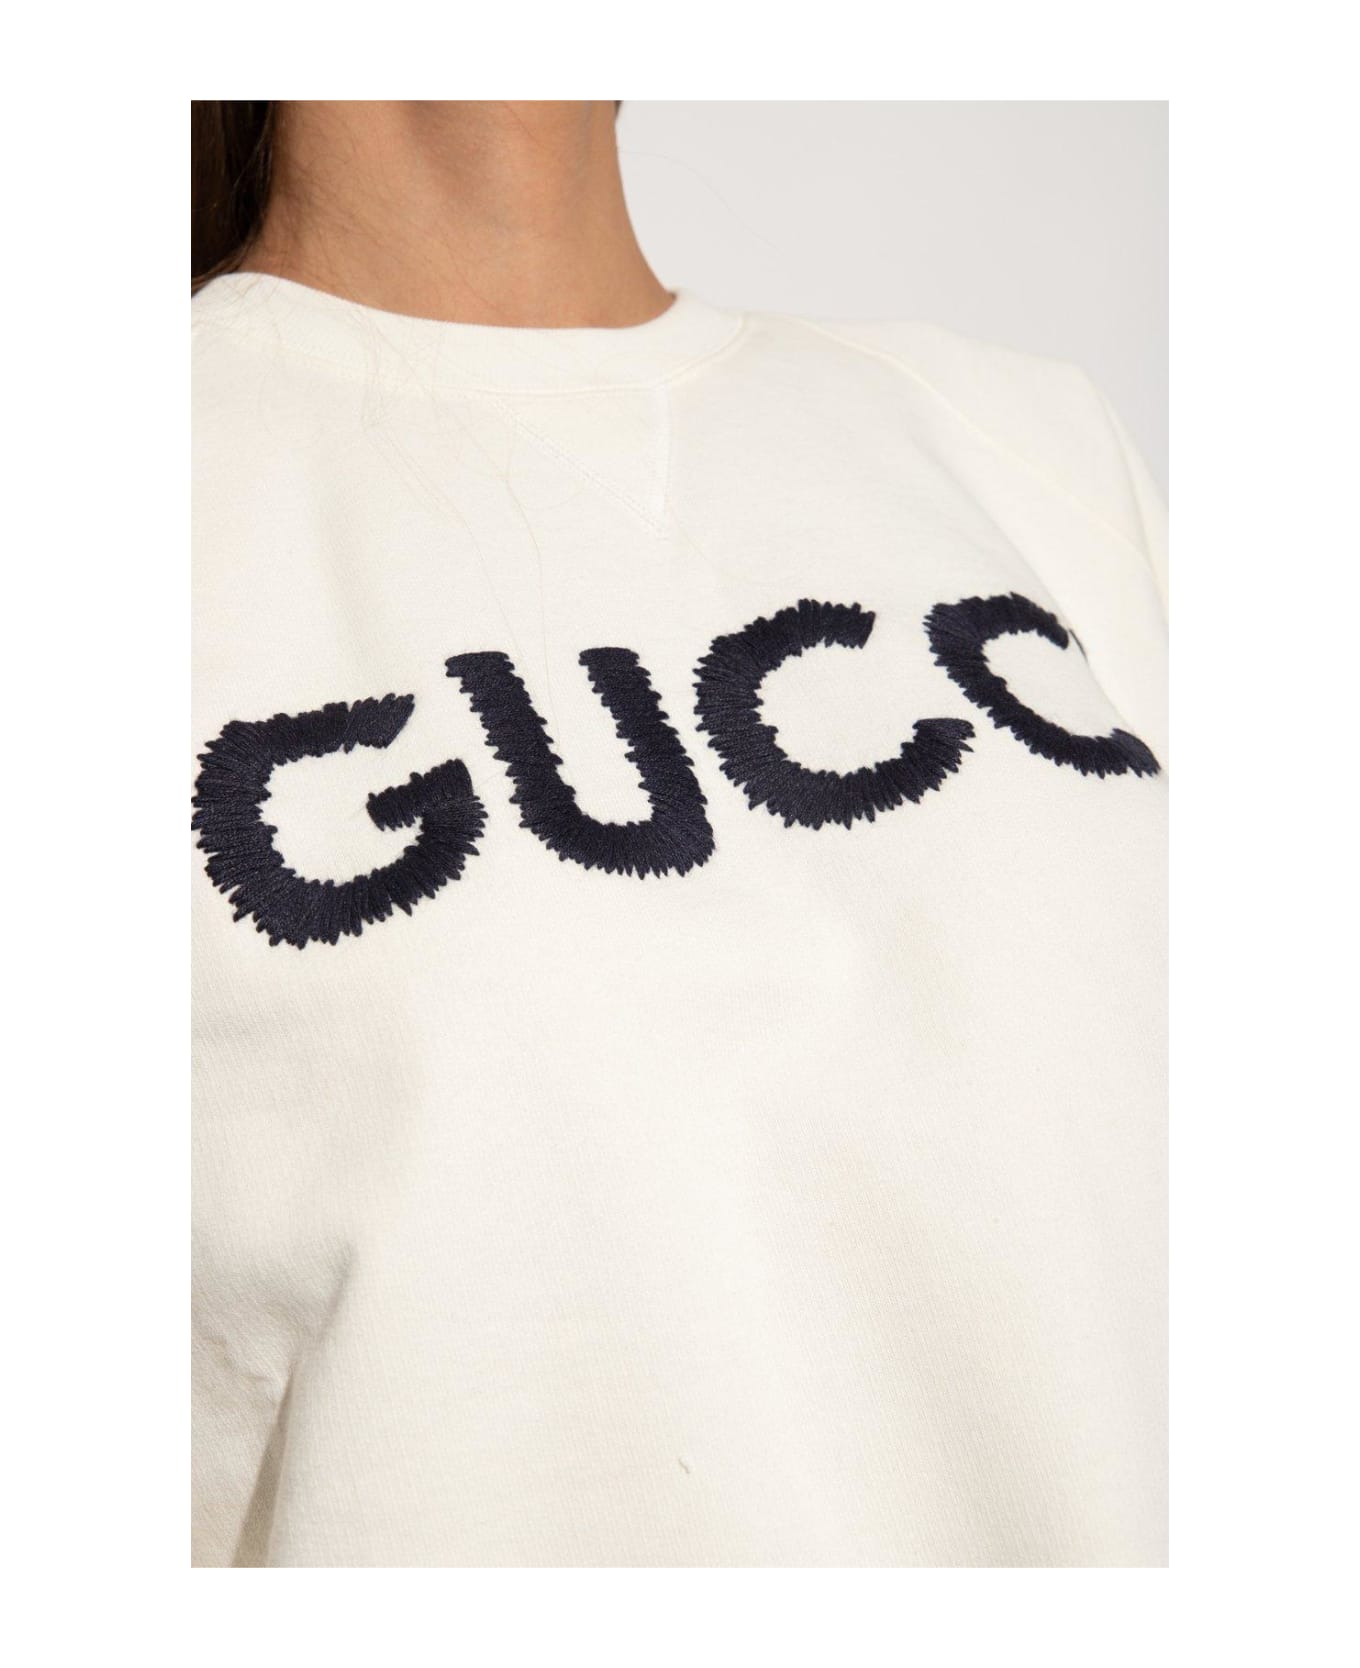 Gucci Logo Embroidered Crewneck Sweatshirt - White